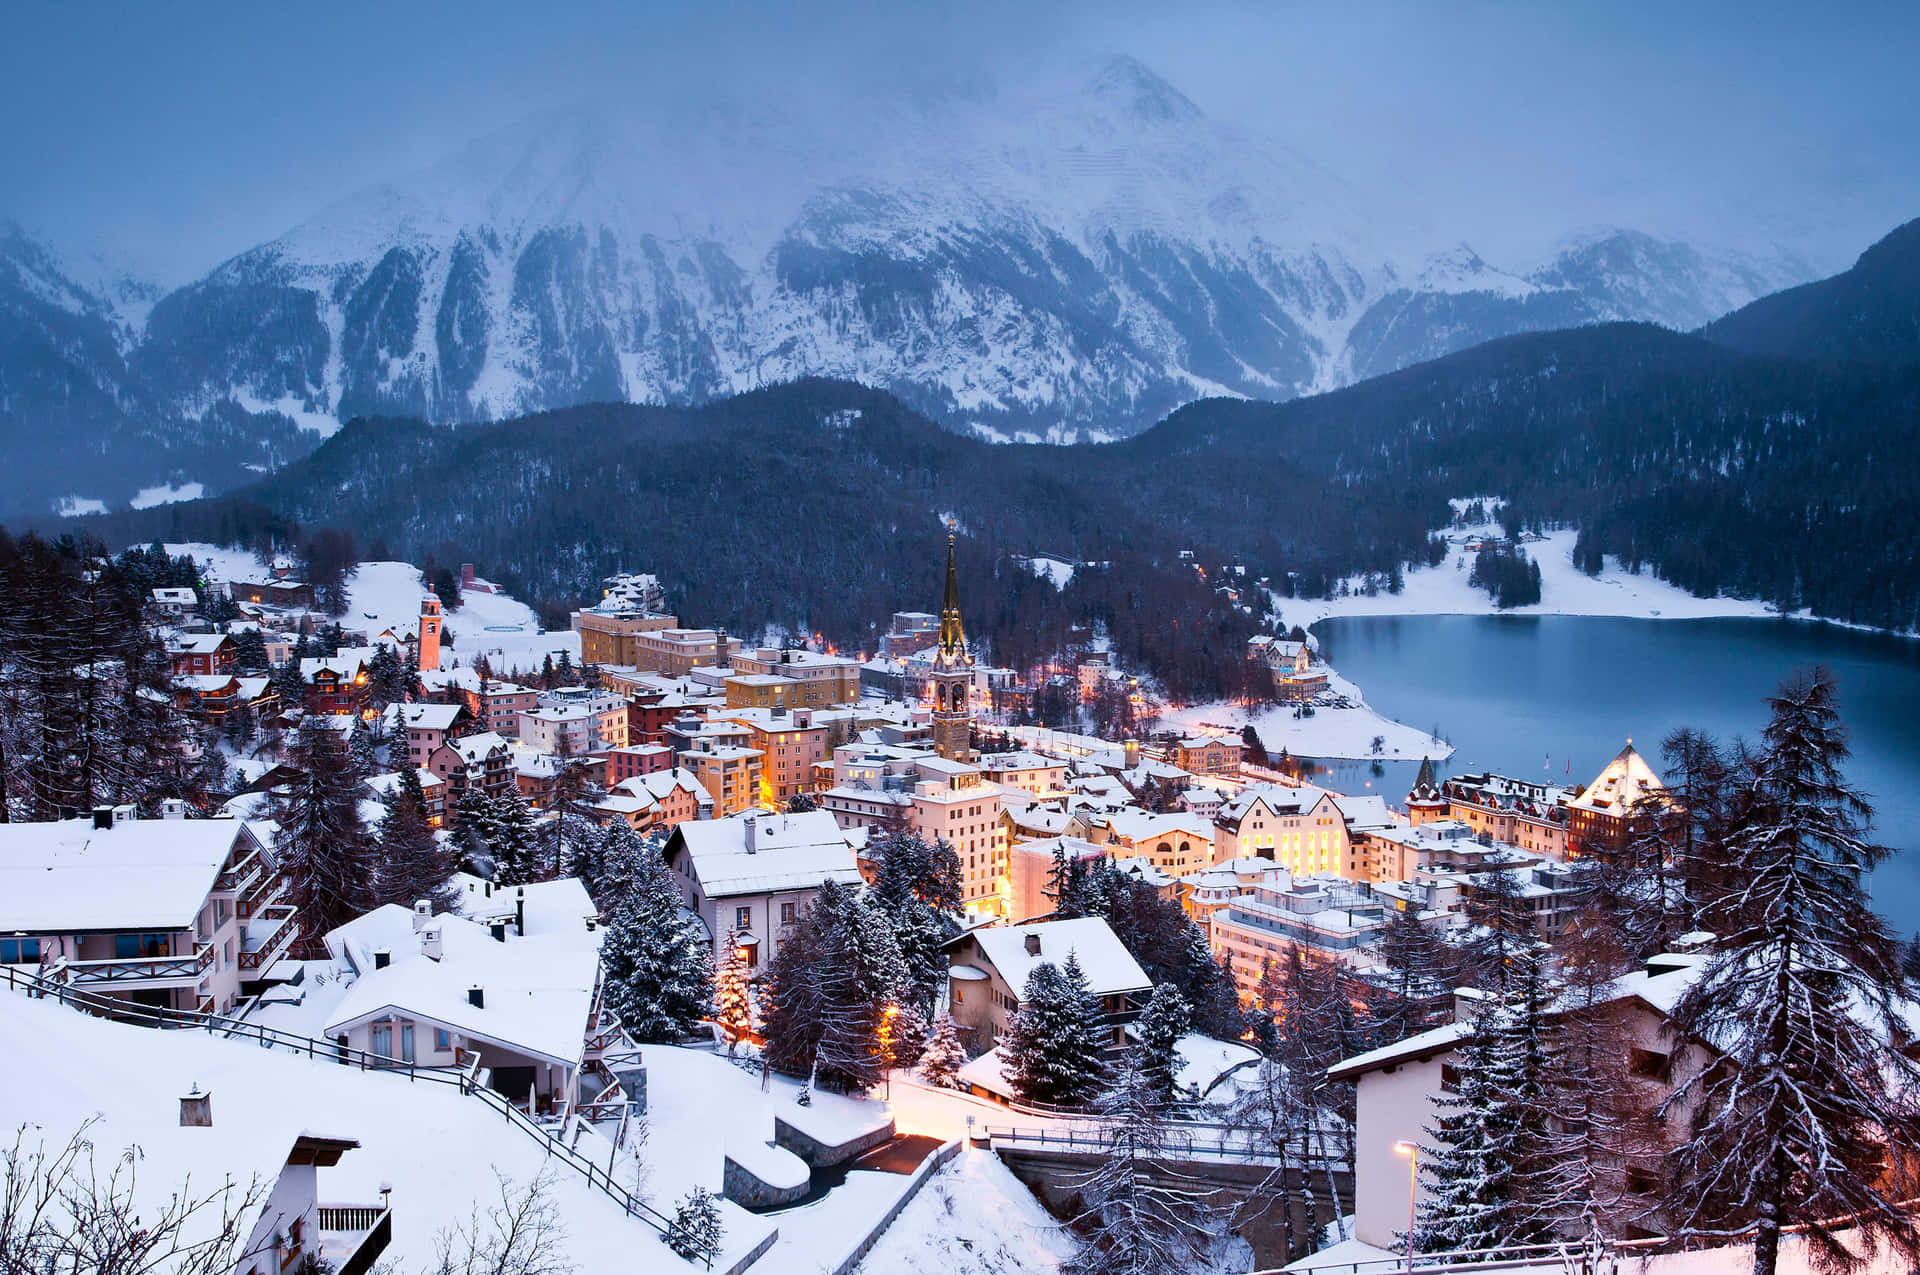 Caption: Captivating Landscape Of Swiss Alps